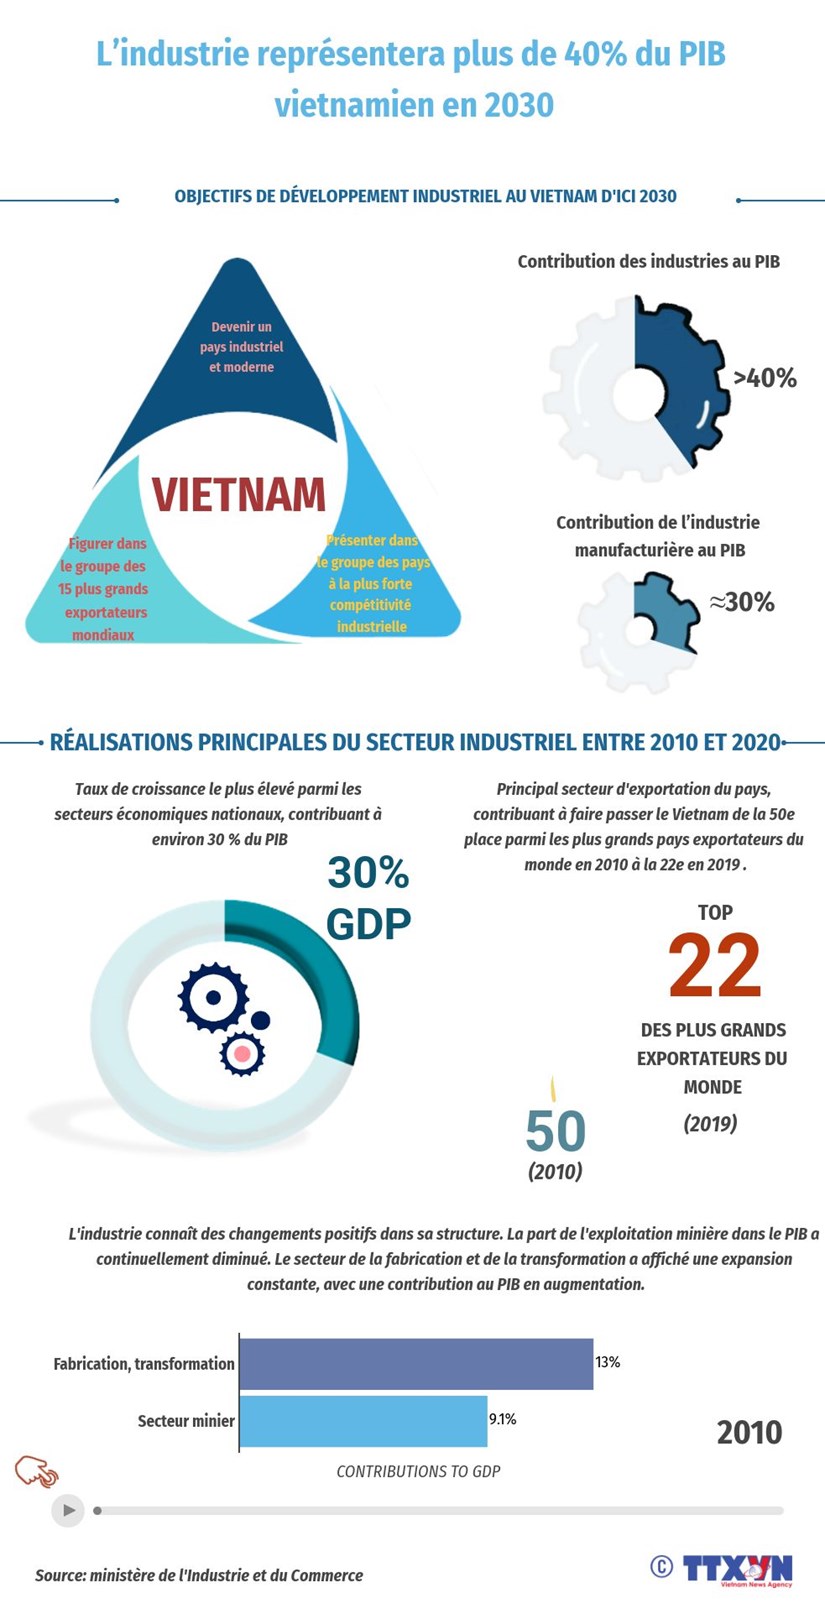 L’industrie representera plus de 40% du PIB vietnamien en 2030/4/6 hinh anh 1